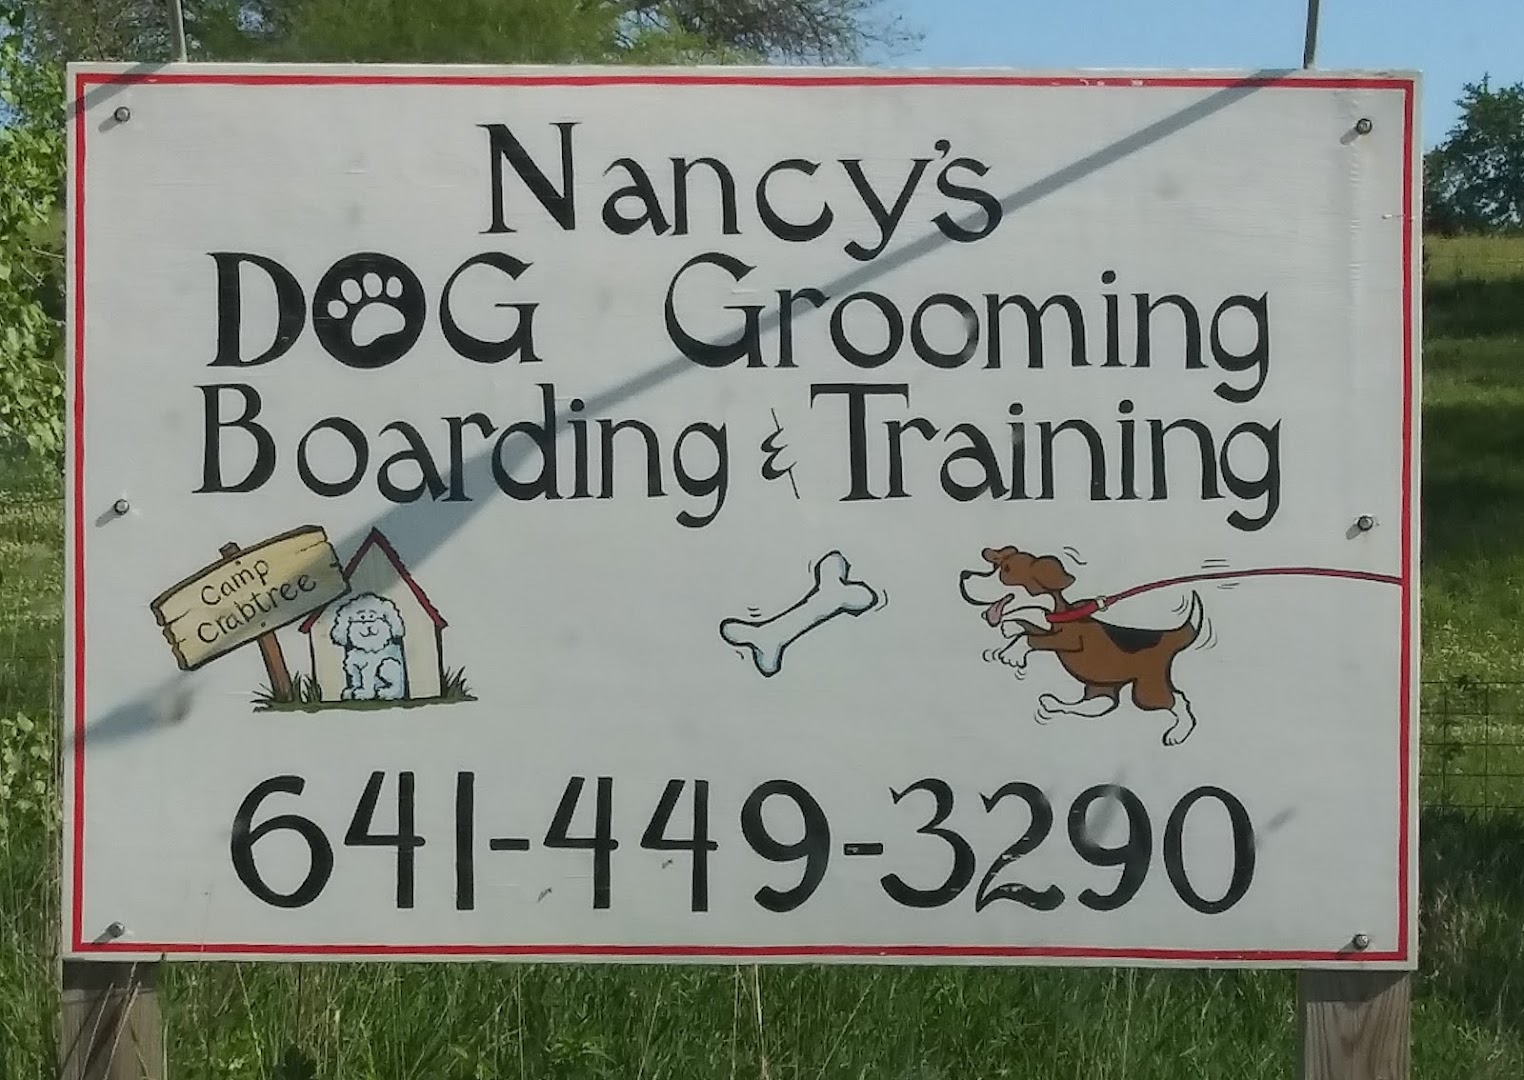 Nancy's Dog Grooming, Boarding & Training